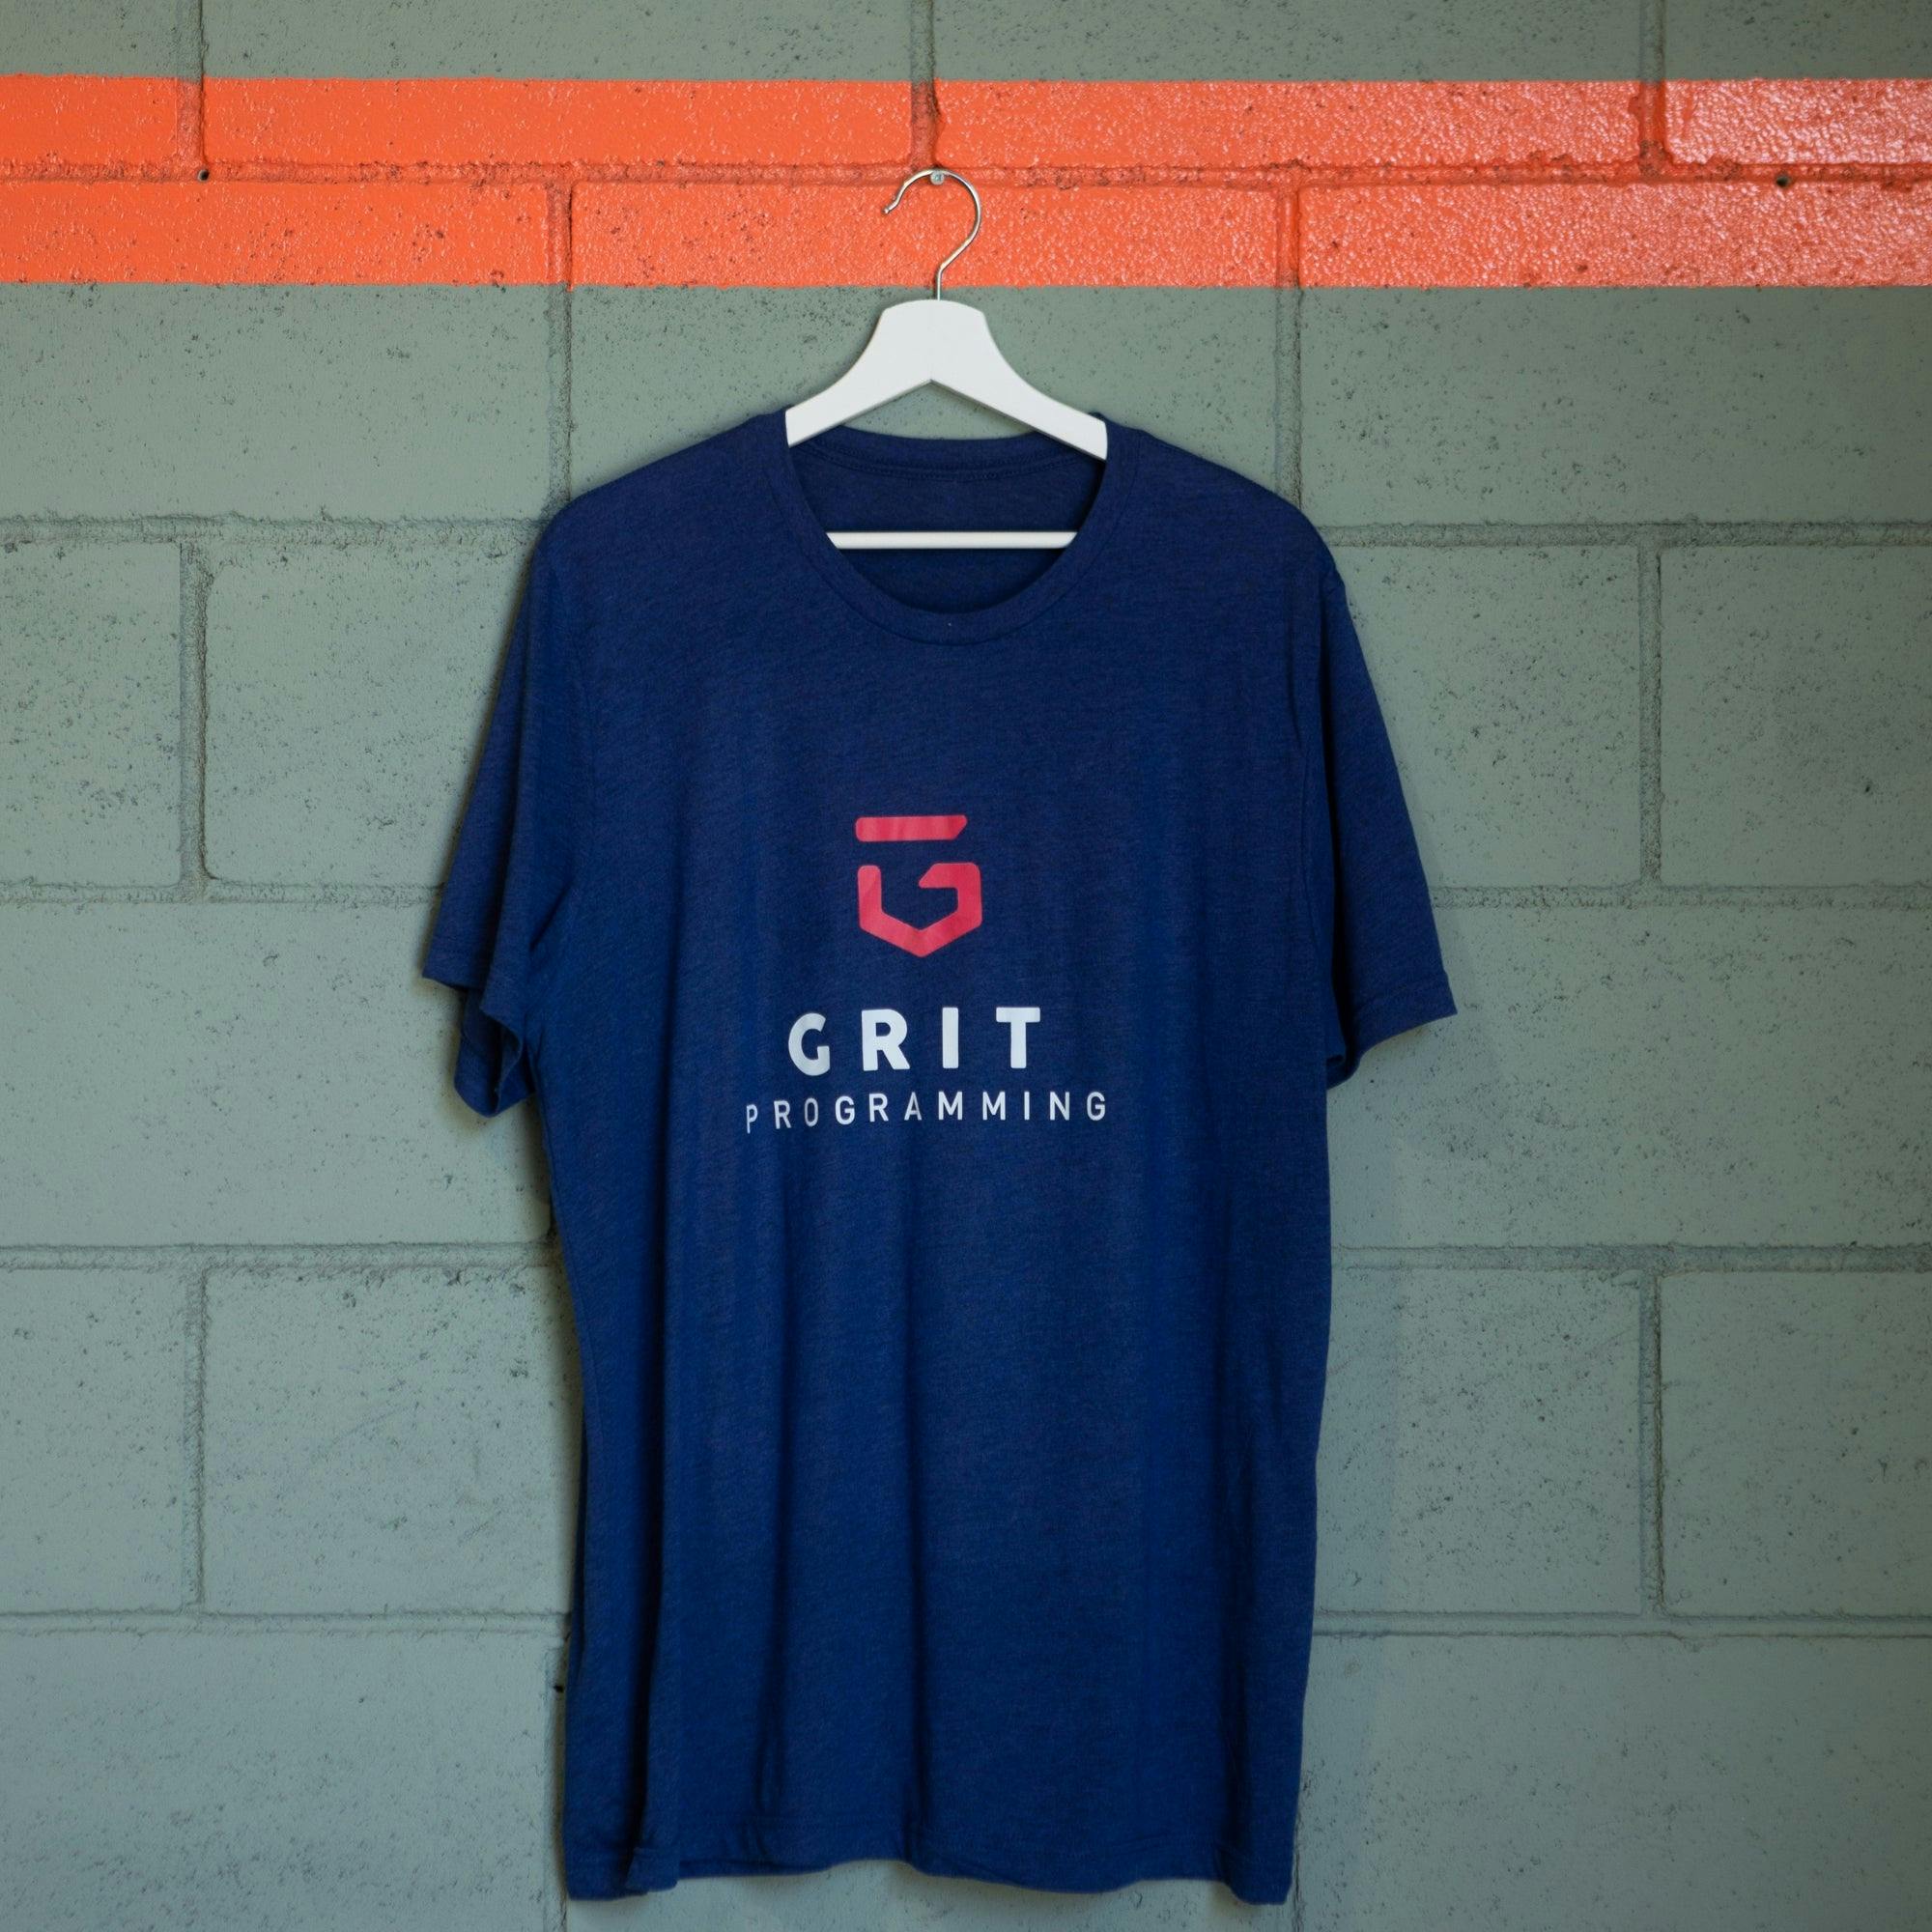 Camiseta GRIT Programming azul oscura